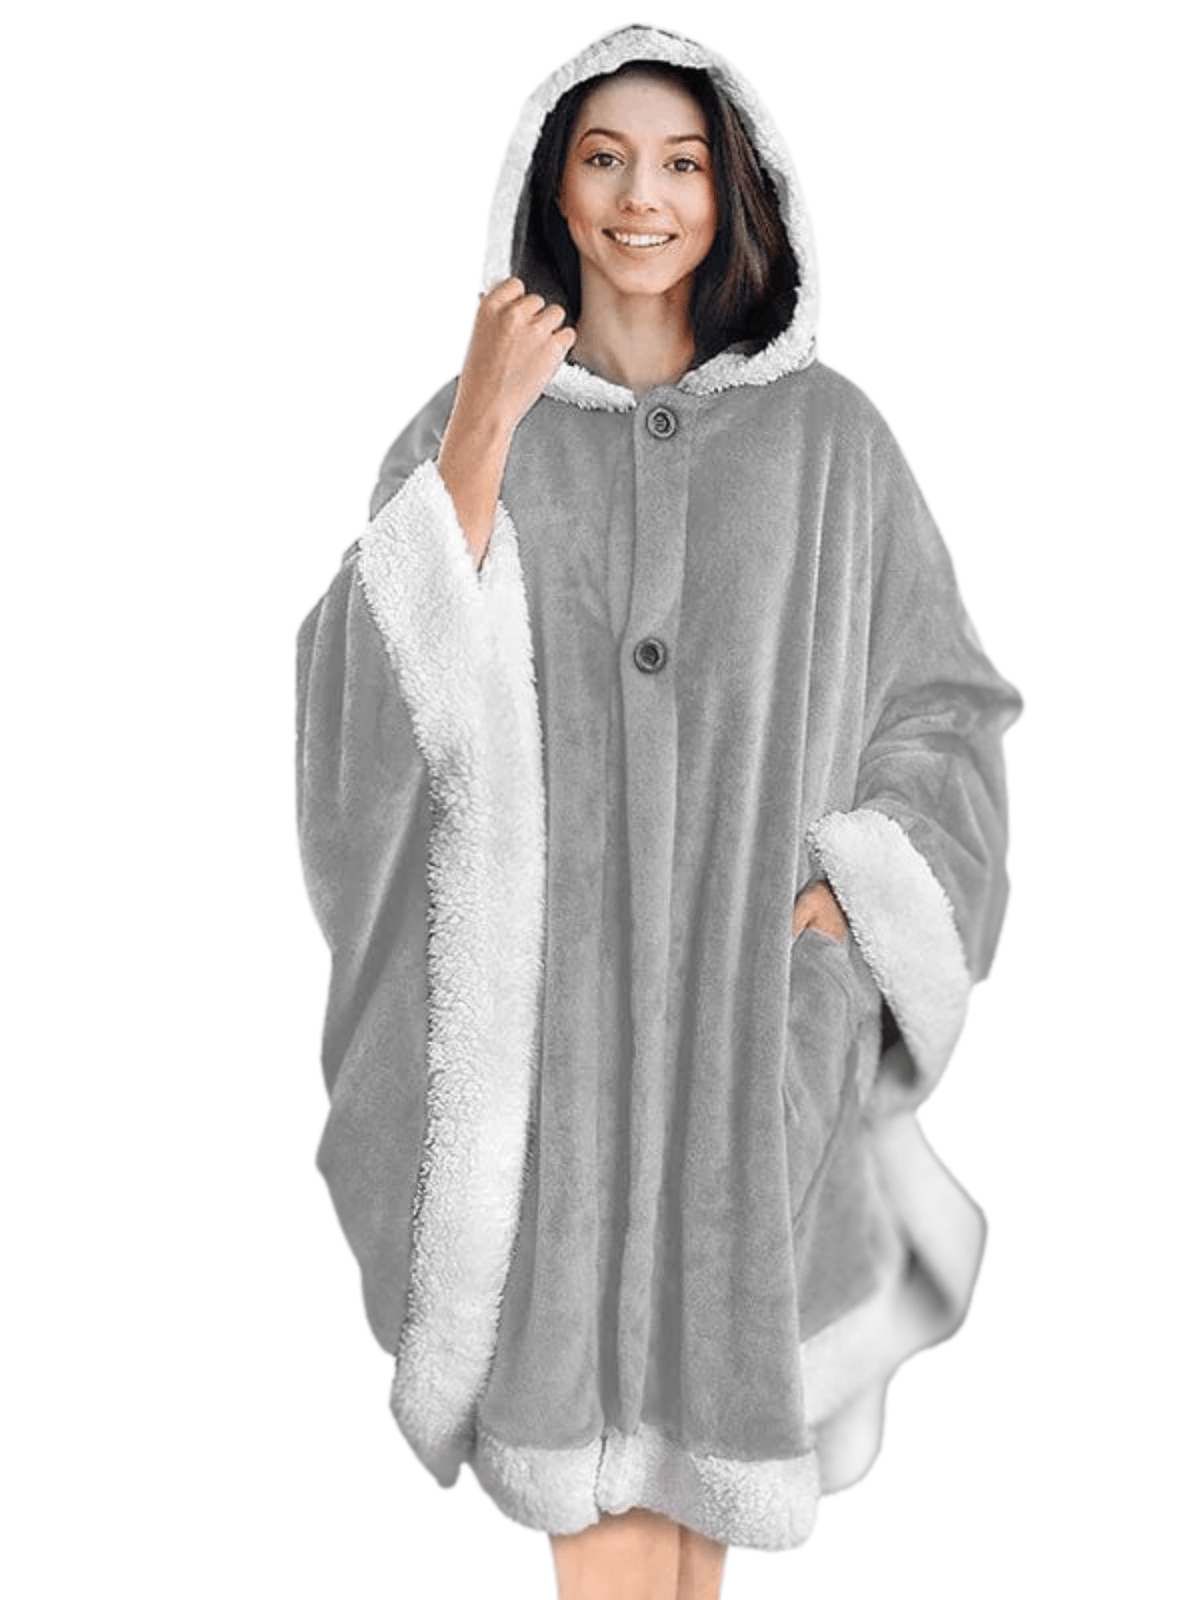 Poncho Polaire Femme  Gris Clair / Une Seule Taille / 100% Coton Sherpa